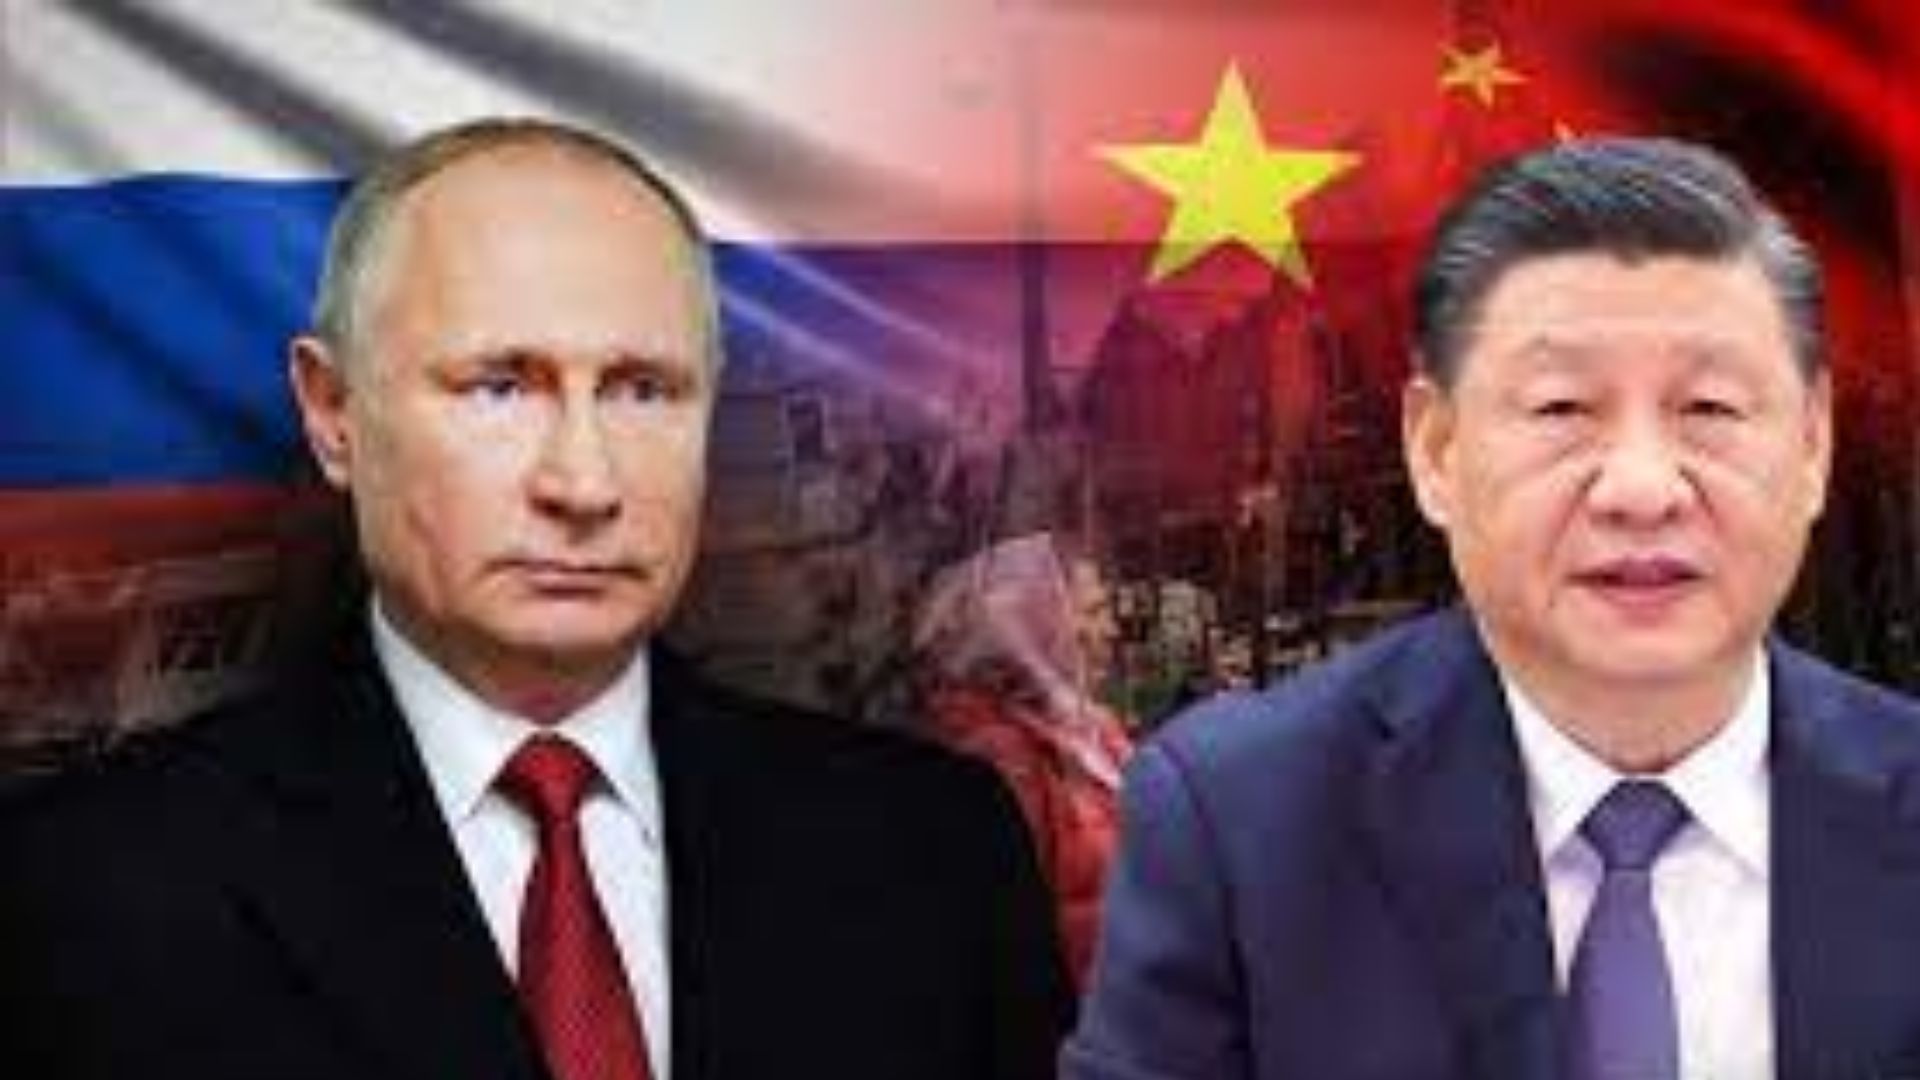 पश्चिम के लिए रूस-चीन गठजोड़ वास्वतिक समस्या : जॉन बोल्टन